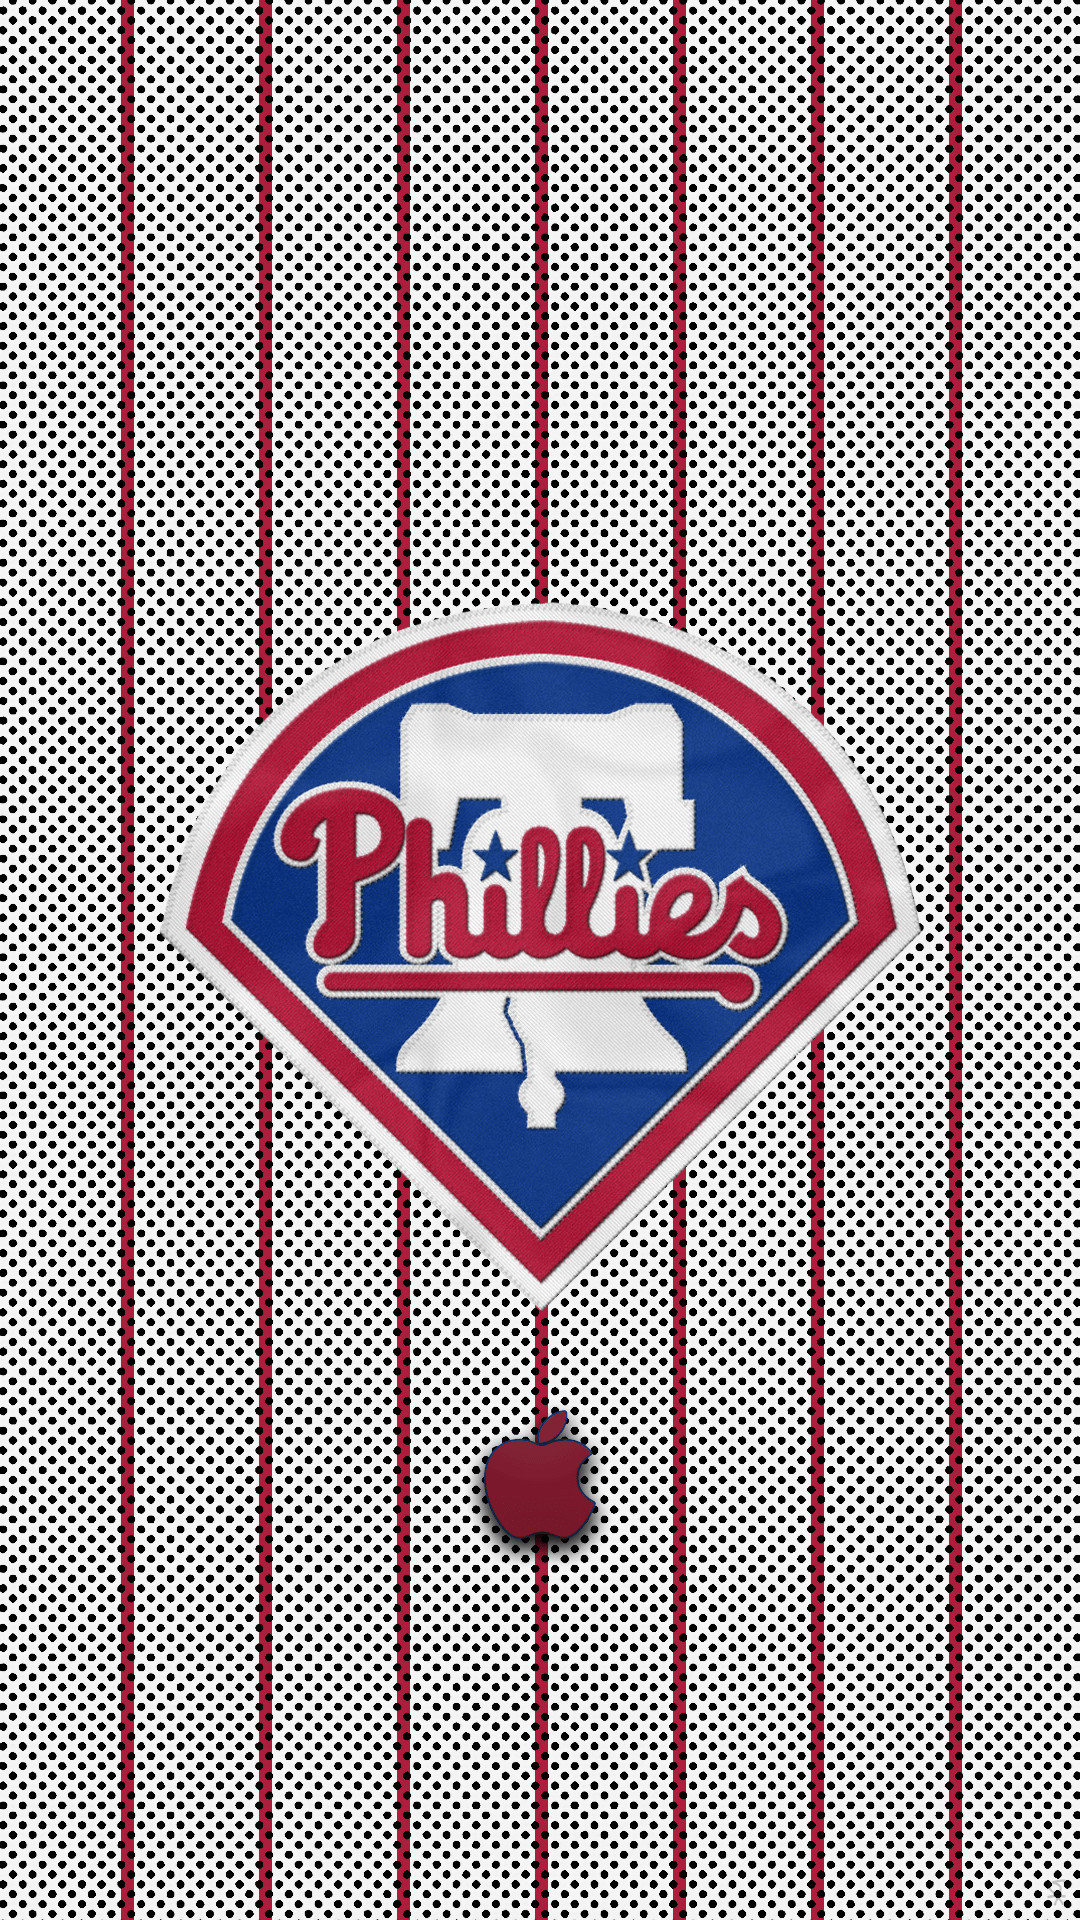 1080x1920  Philadelphia Phillies Browser Themes and Desktop/iPhone Wallpaper  .